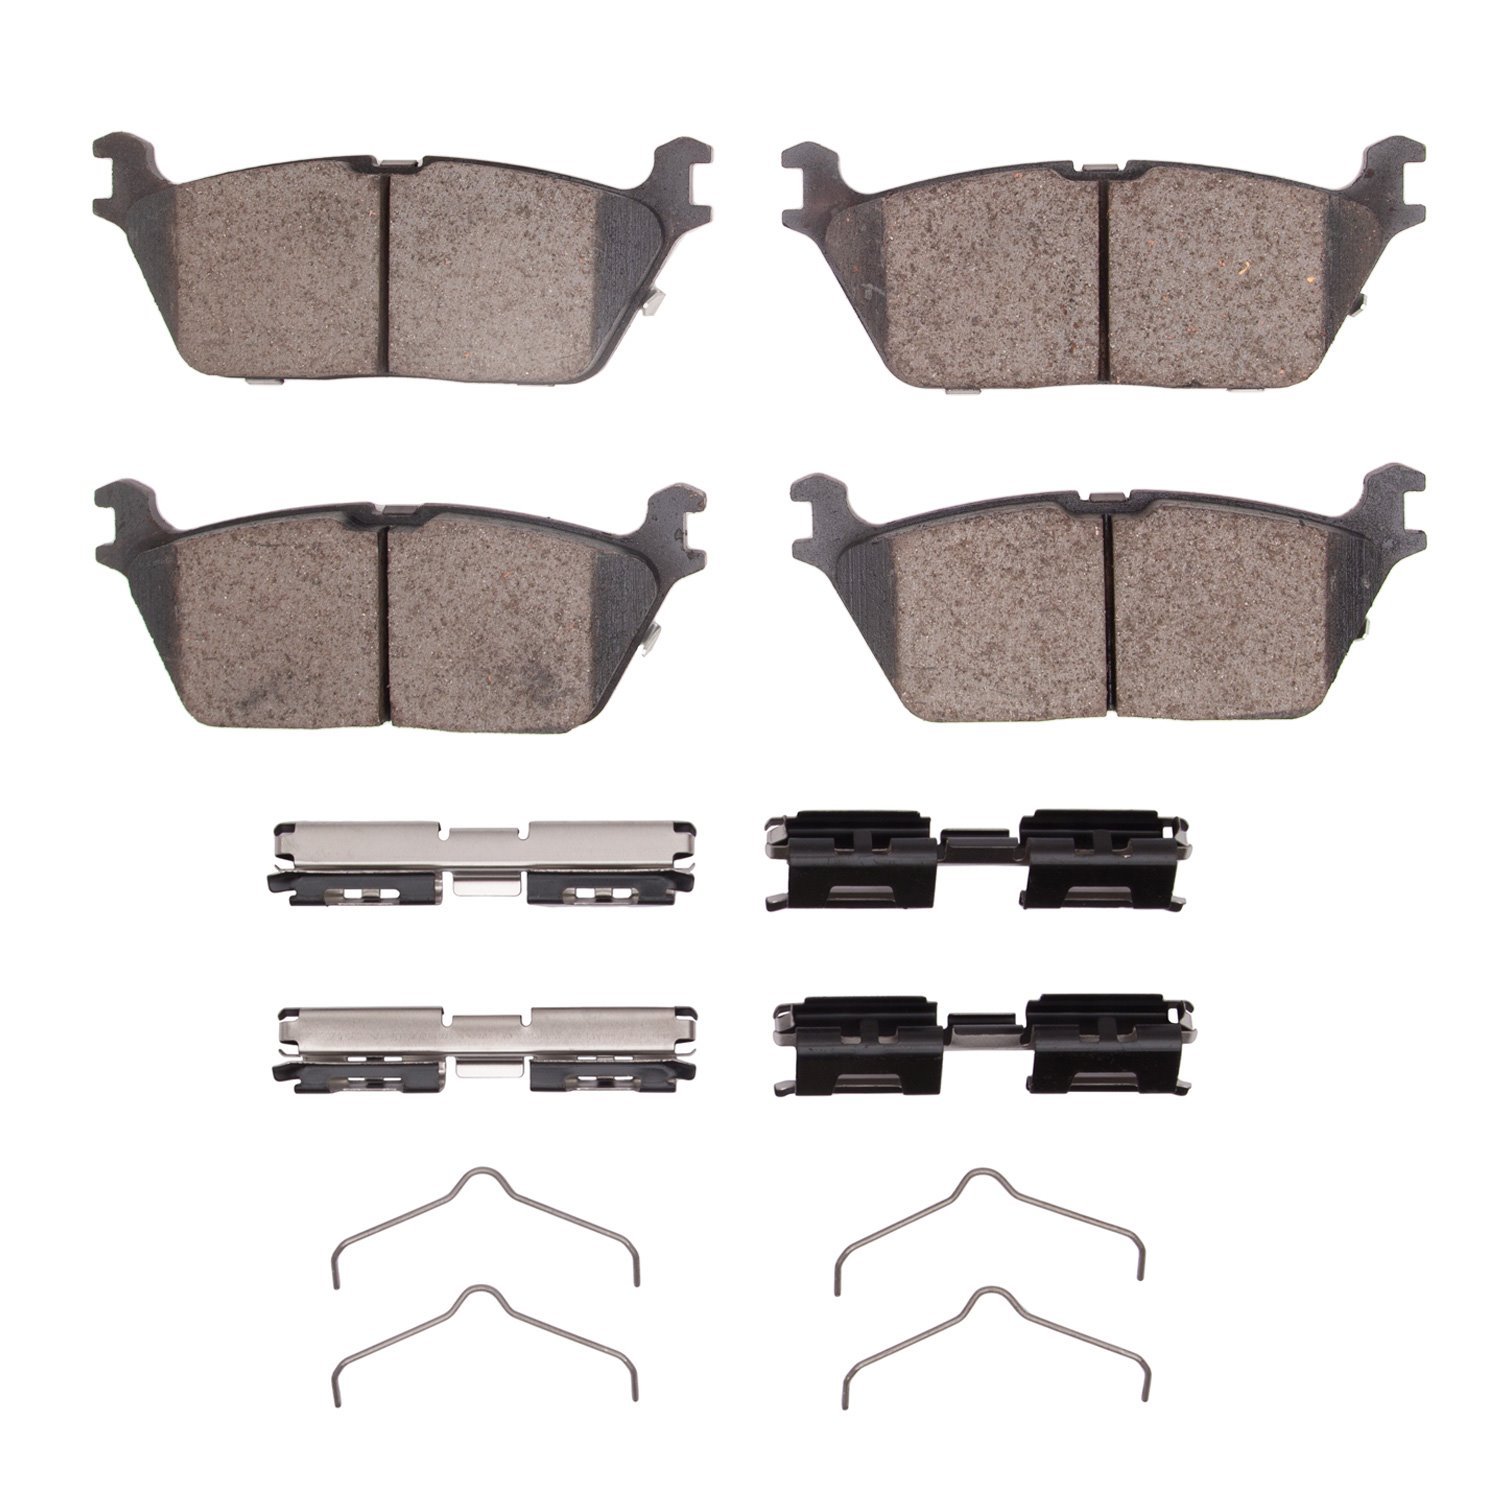 1310-2169-01 3000-Series Ceramic Brake Pads & Hardware Kit, Fits Select Mopar, Position: Rear